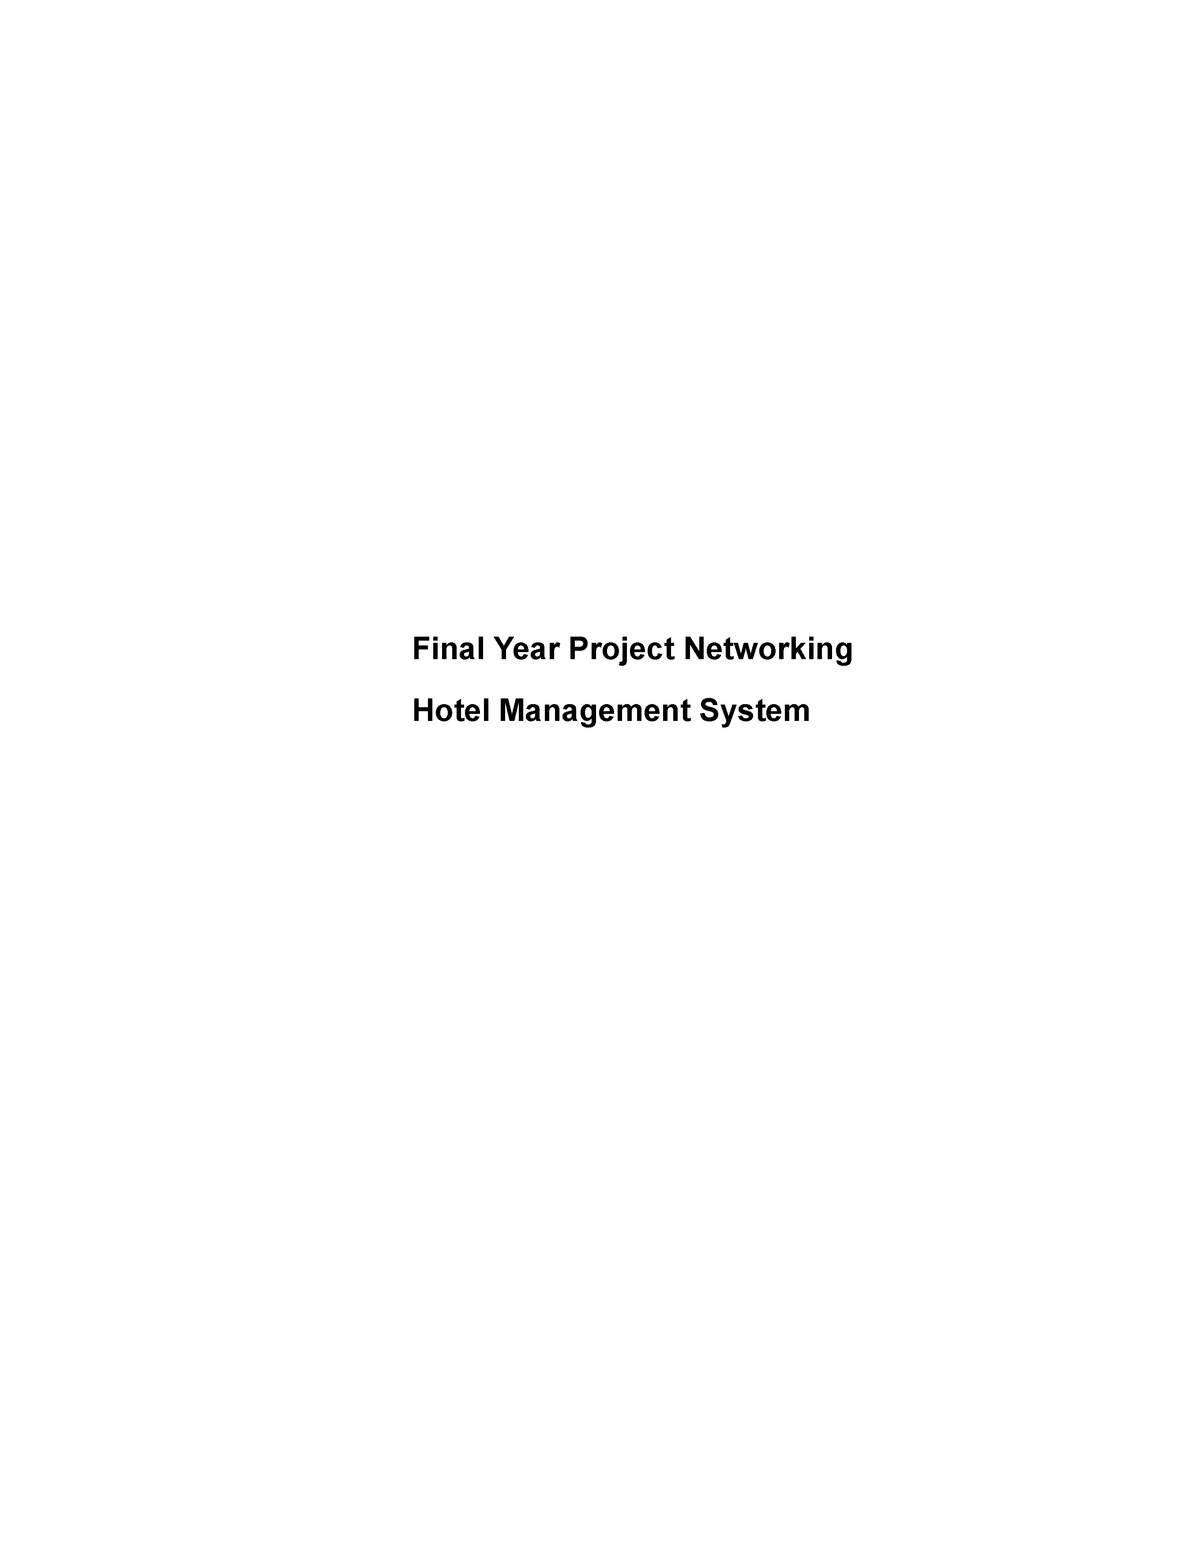 hotel management system proposal